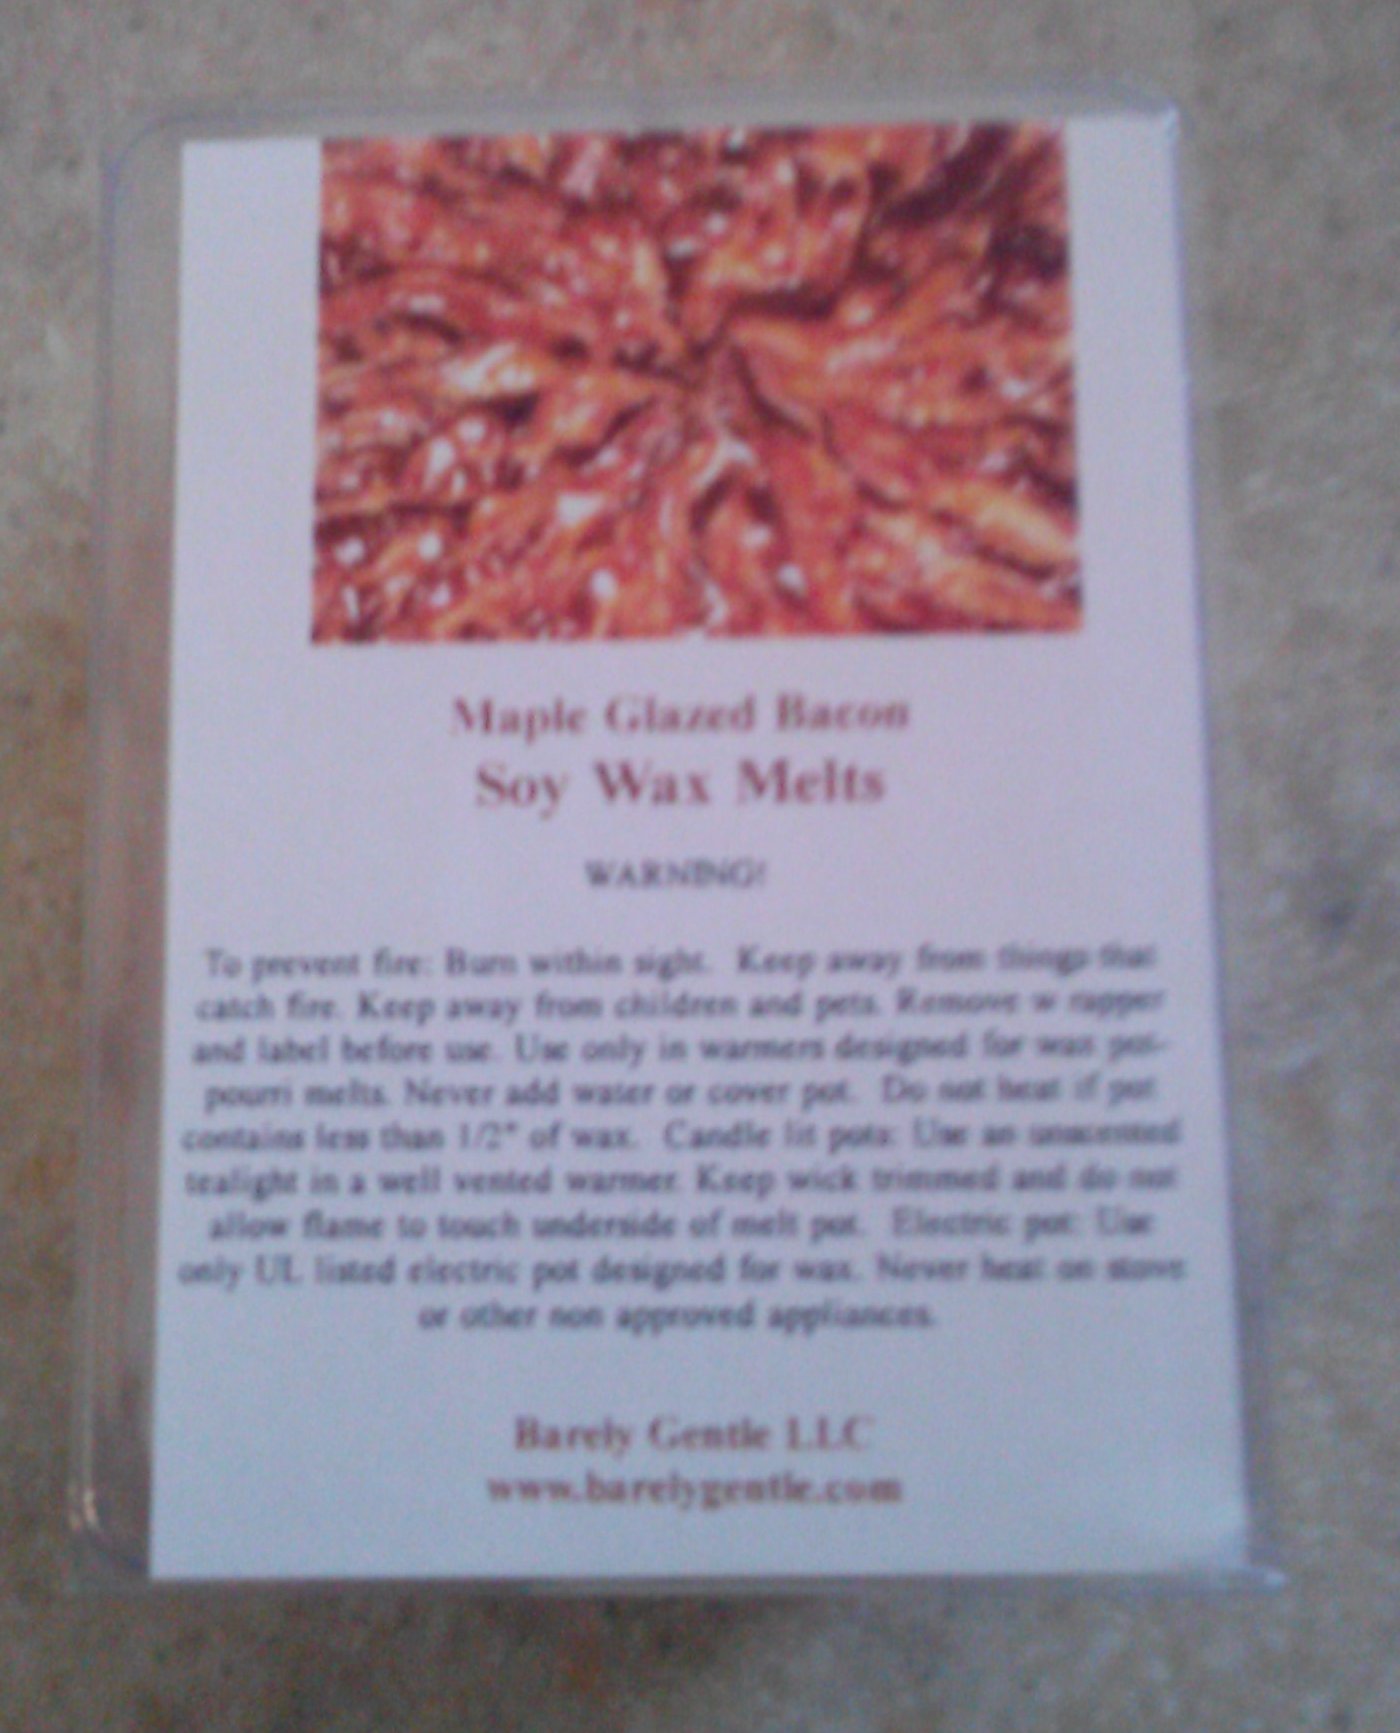 Maple Glazed Bacon Soy Tart Melts